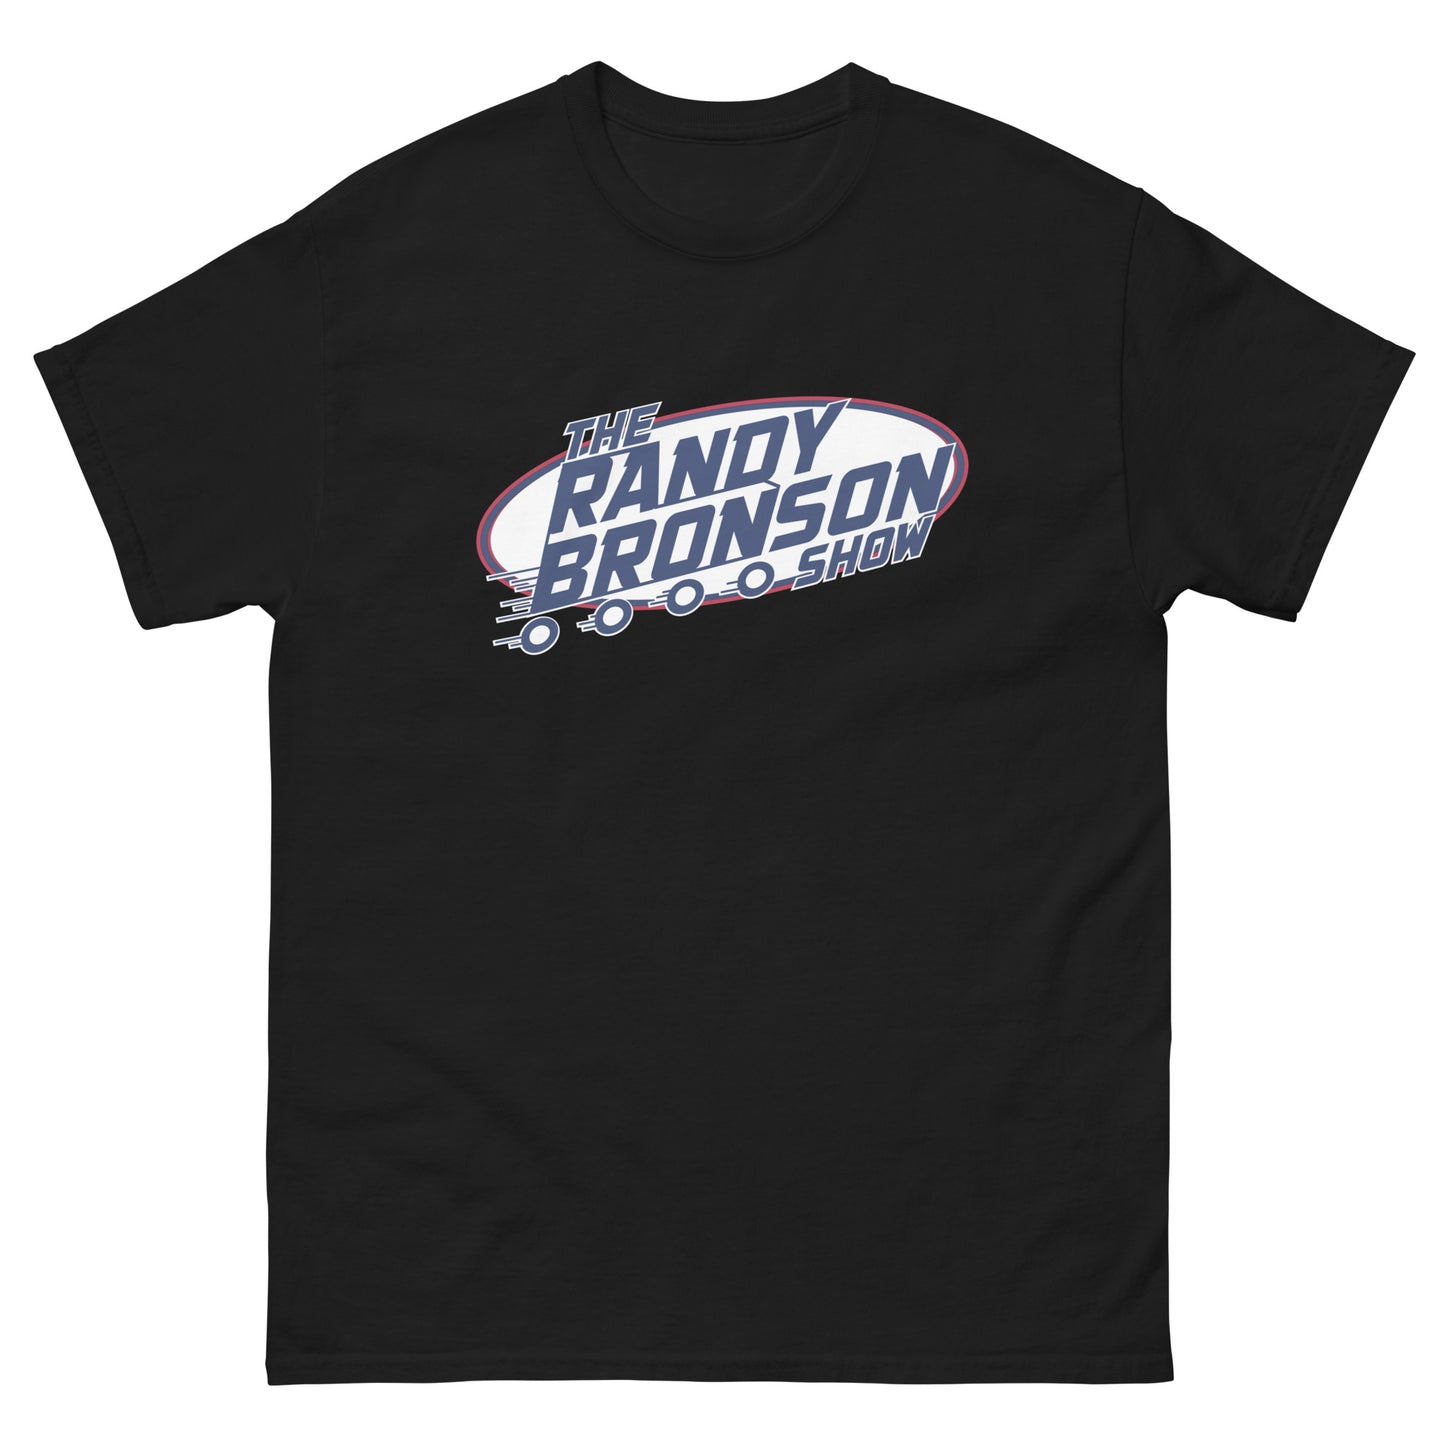 The Randy Bronson Show Tee